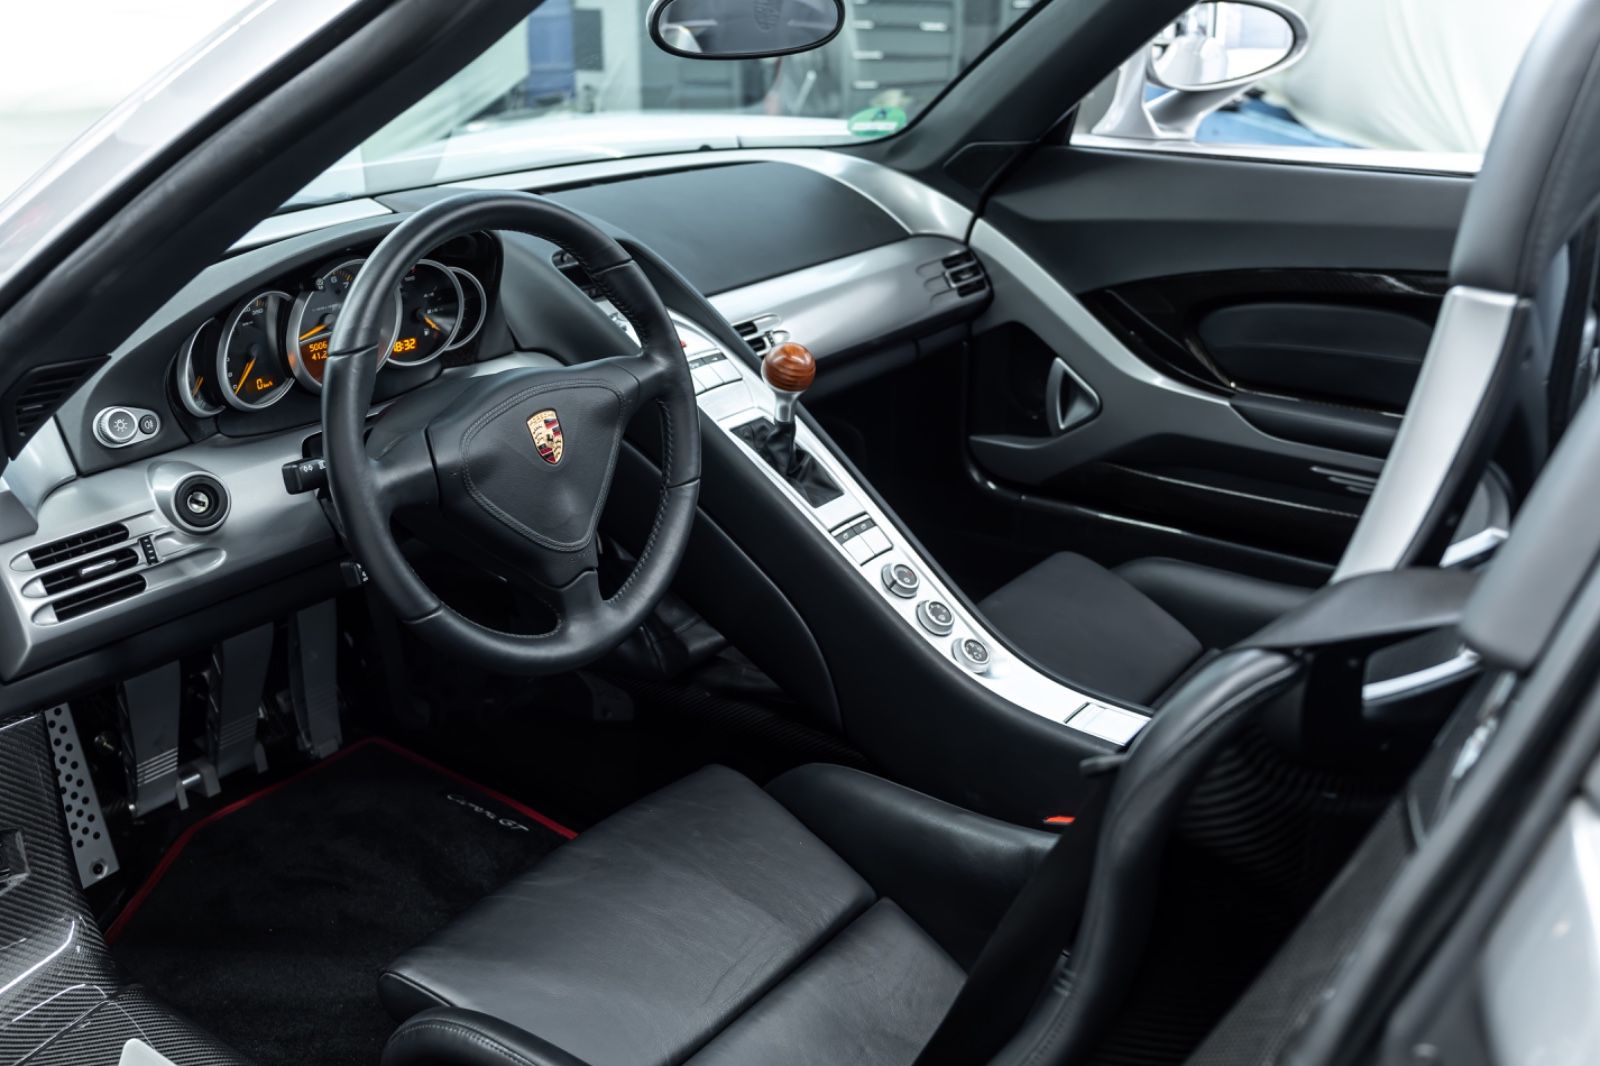 Fahrzeugabbildung Porsche Carrera GT I 5.000km I 1. Hand I Deutschland